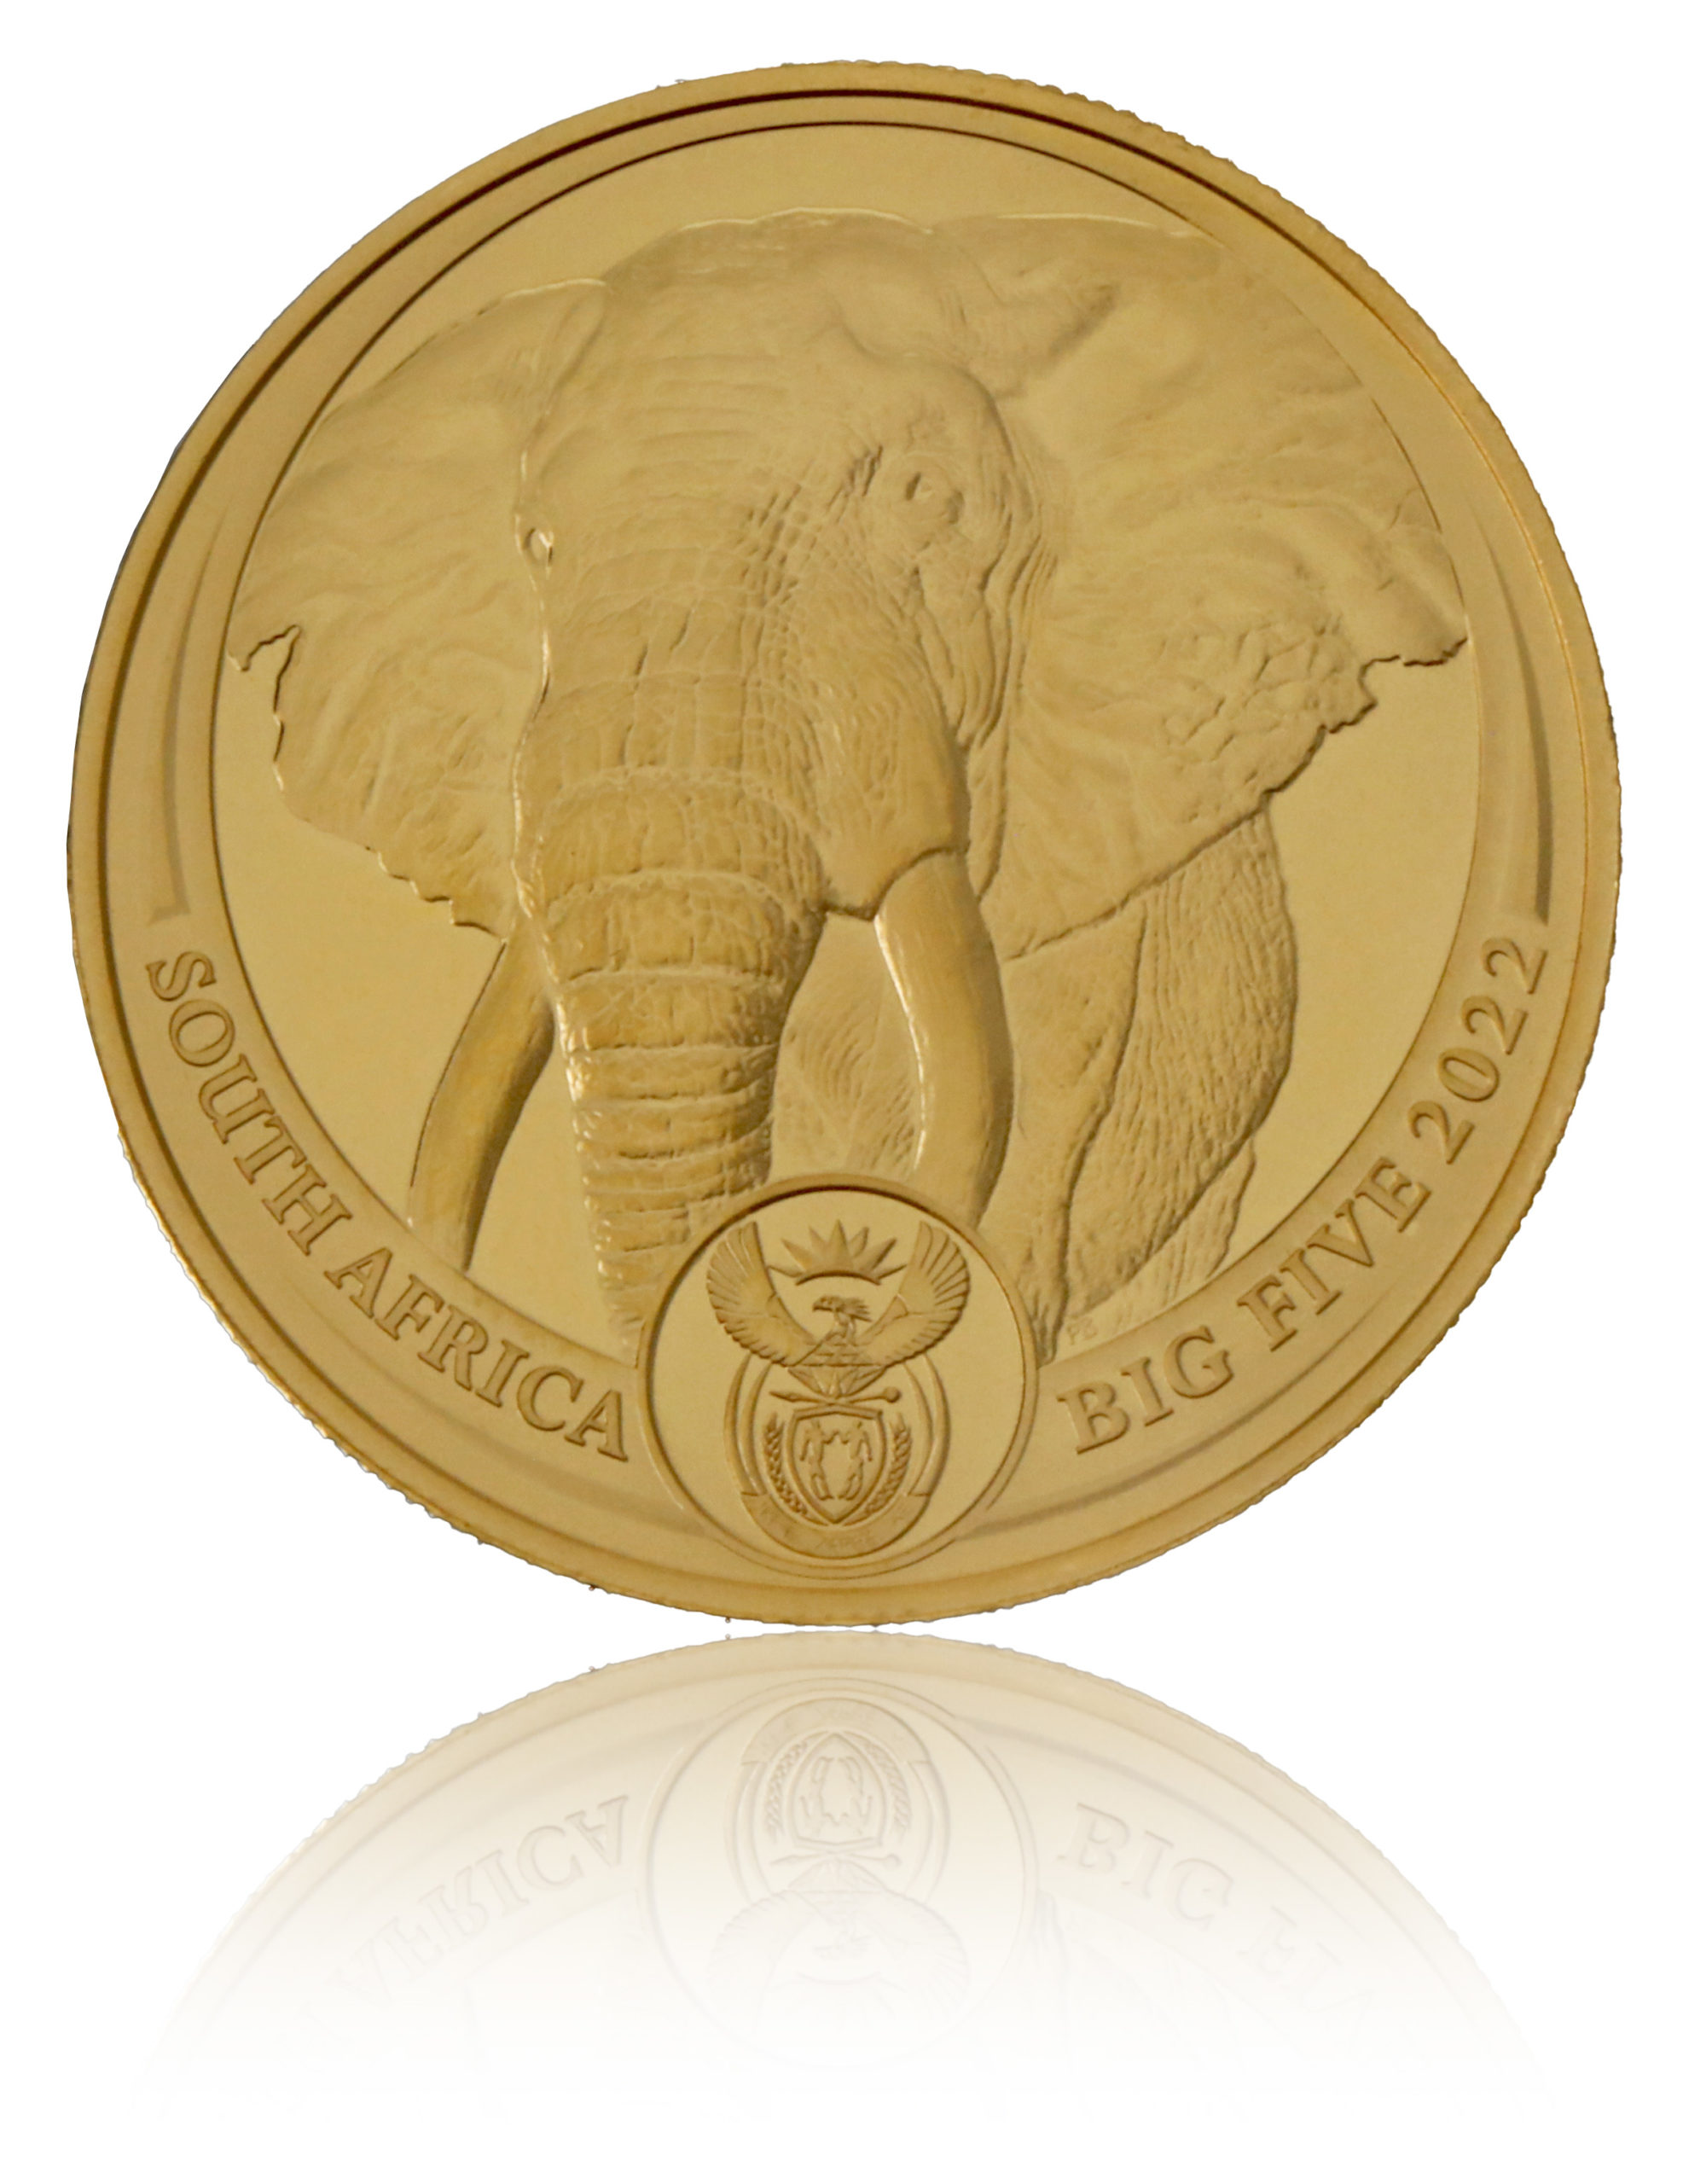 Goldmünze 1oz Big Five - Elephant bei Goldreserven kaufen